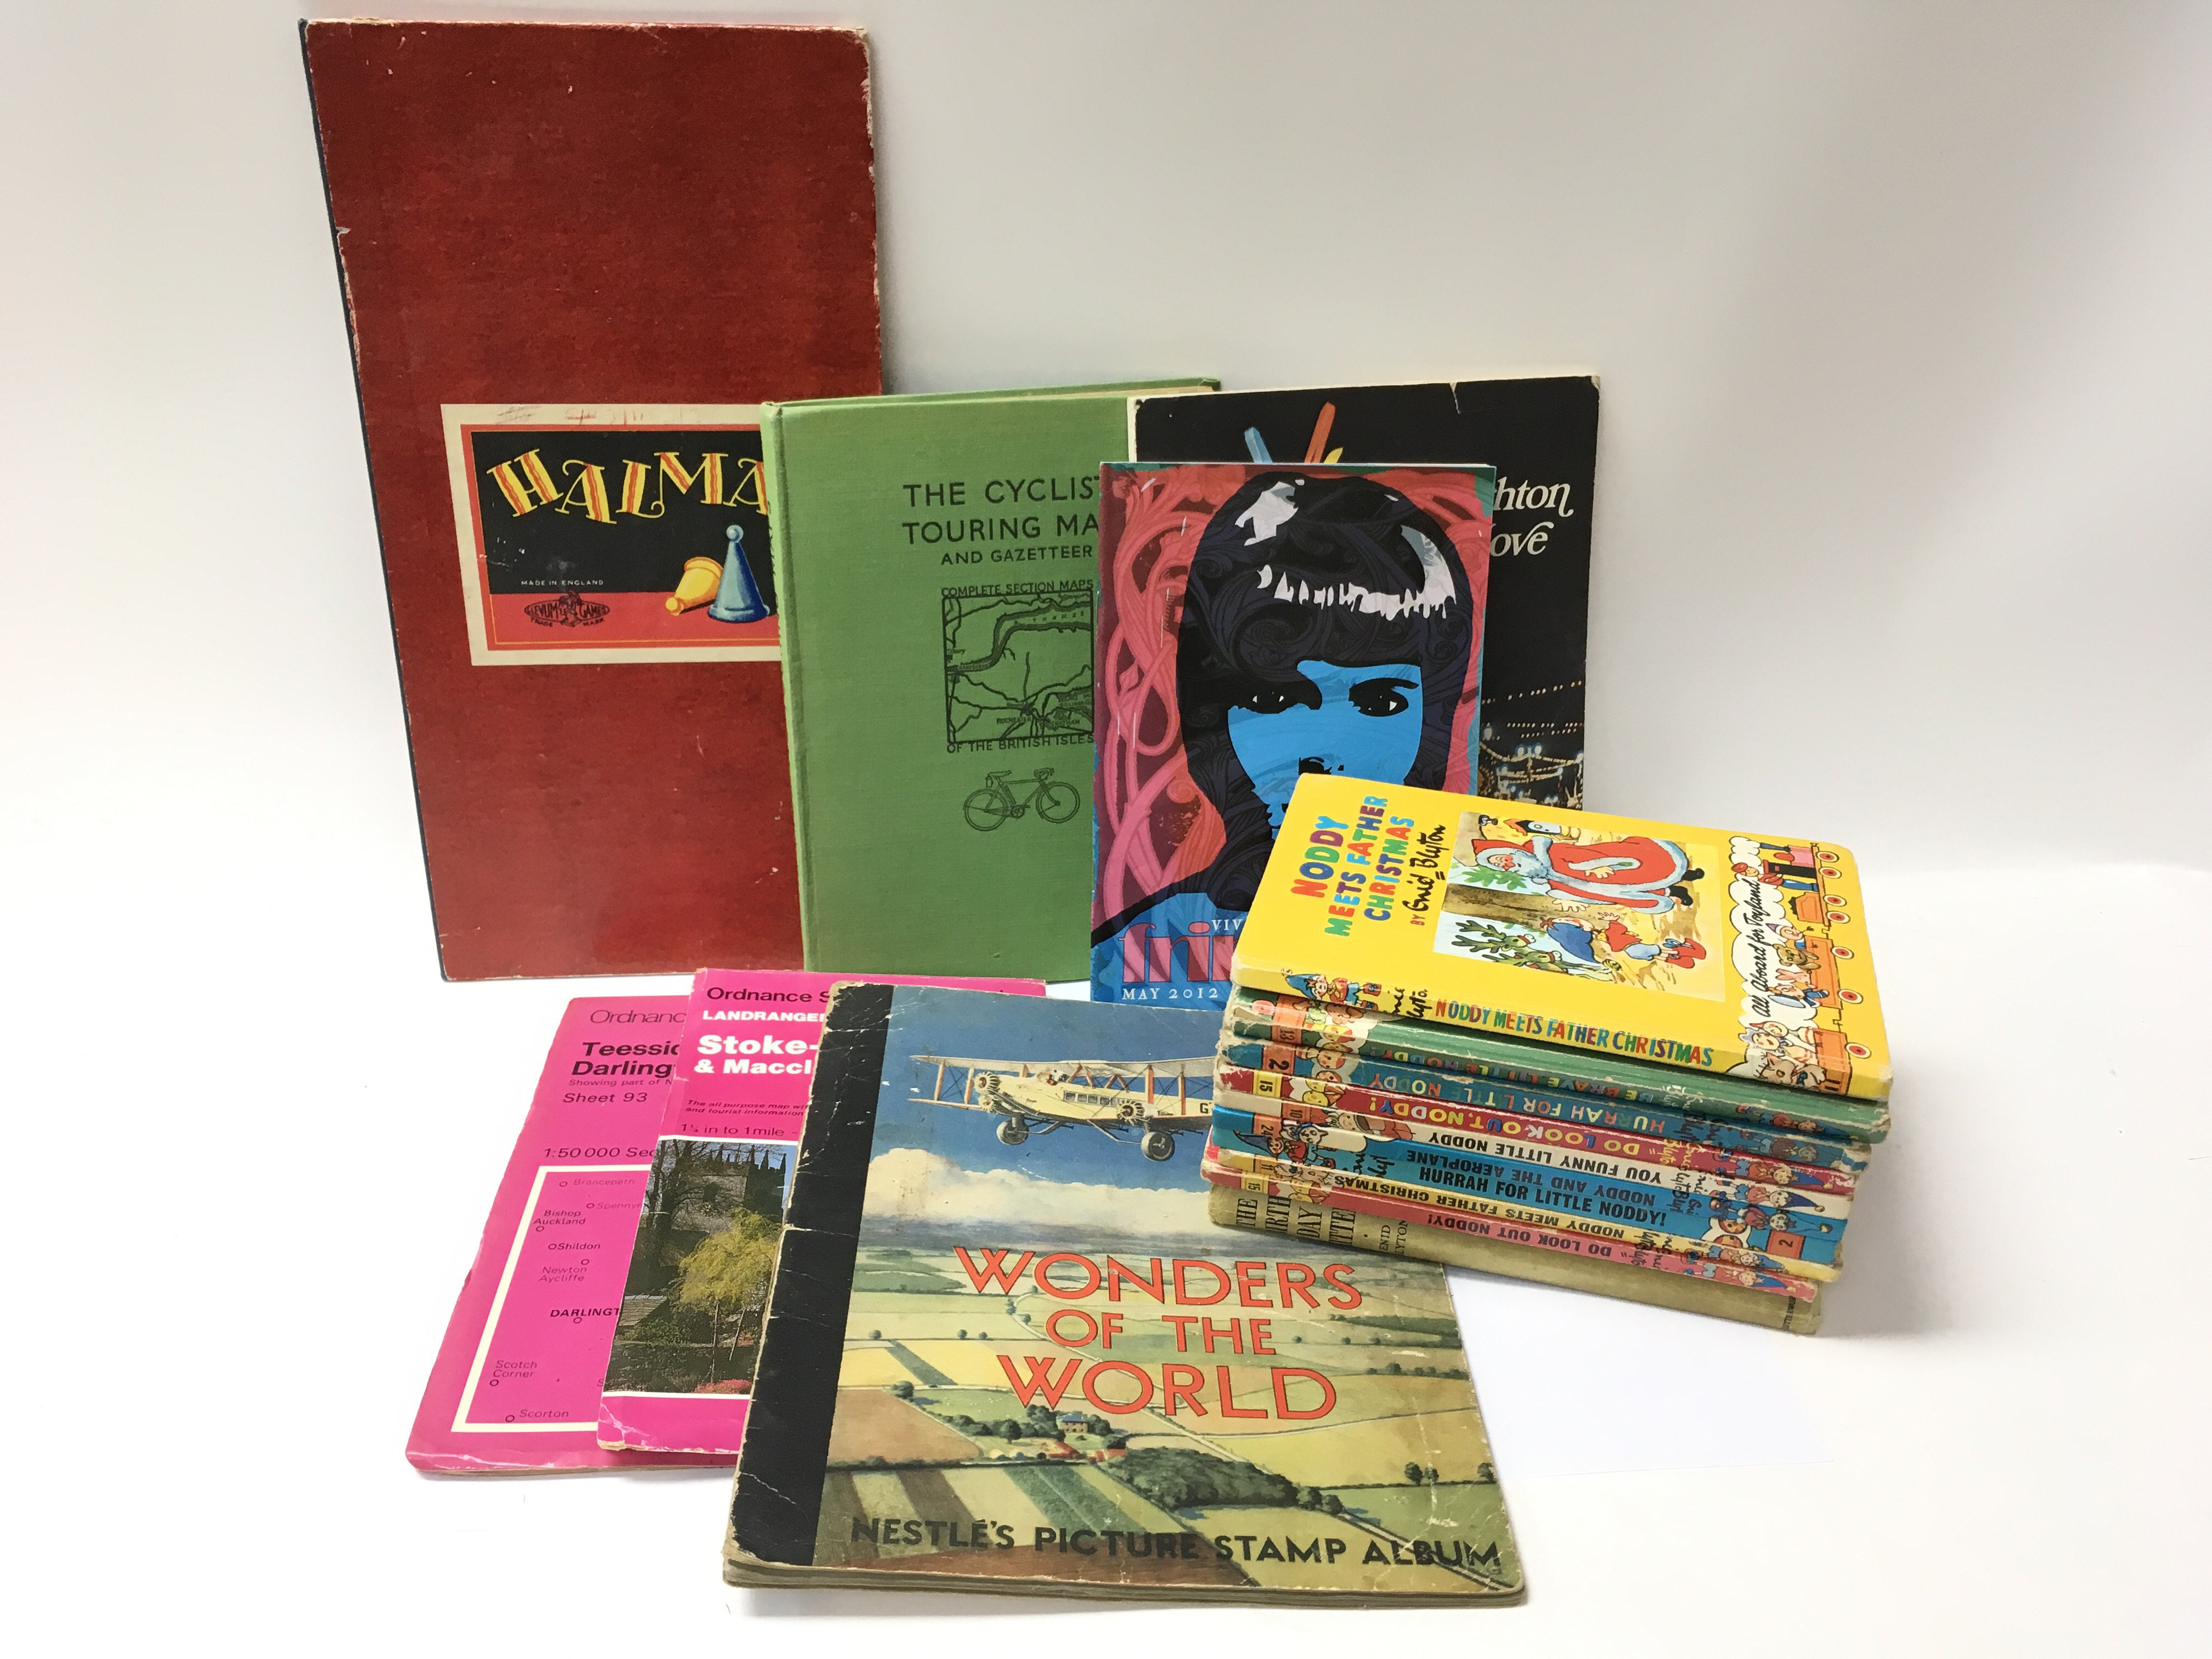 A collection of vintage Noddy books, ordnance survey maps, nestle picture stamp album, cigarette